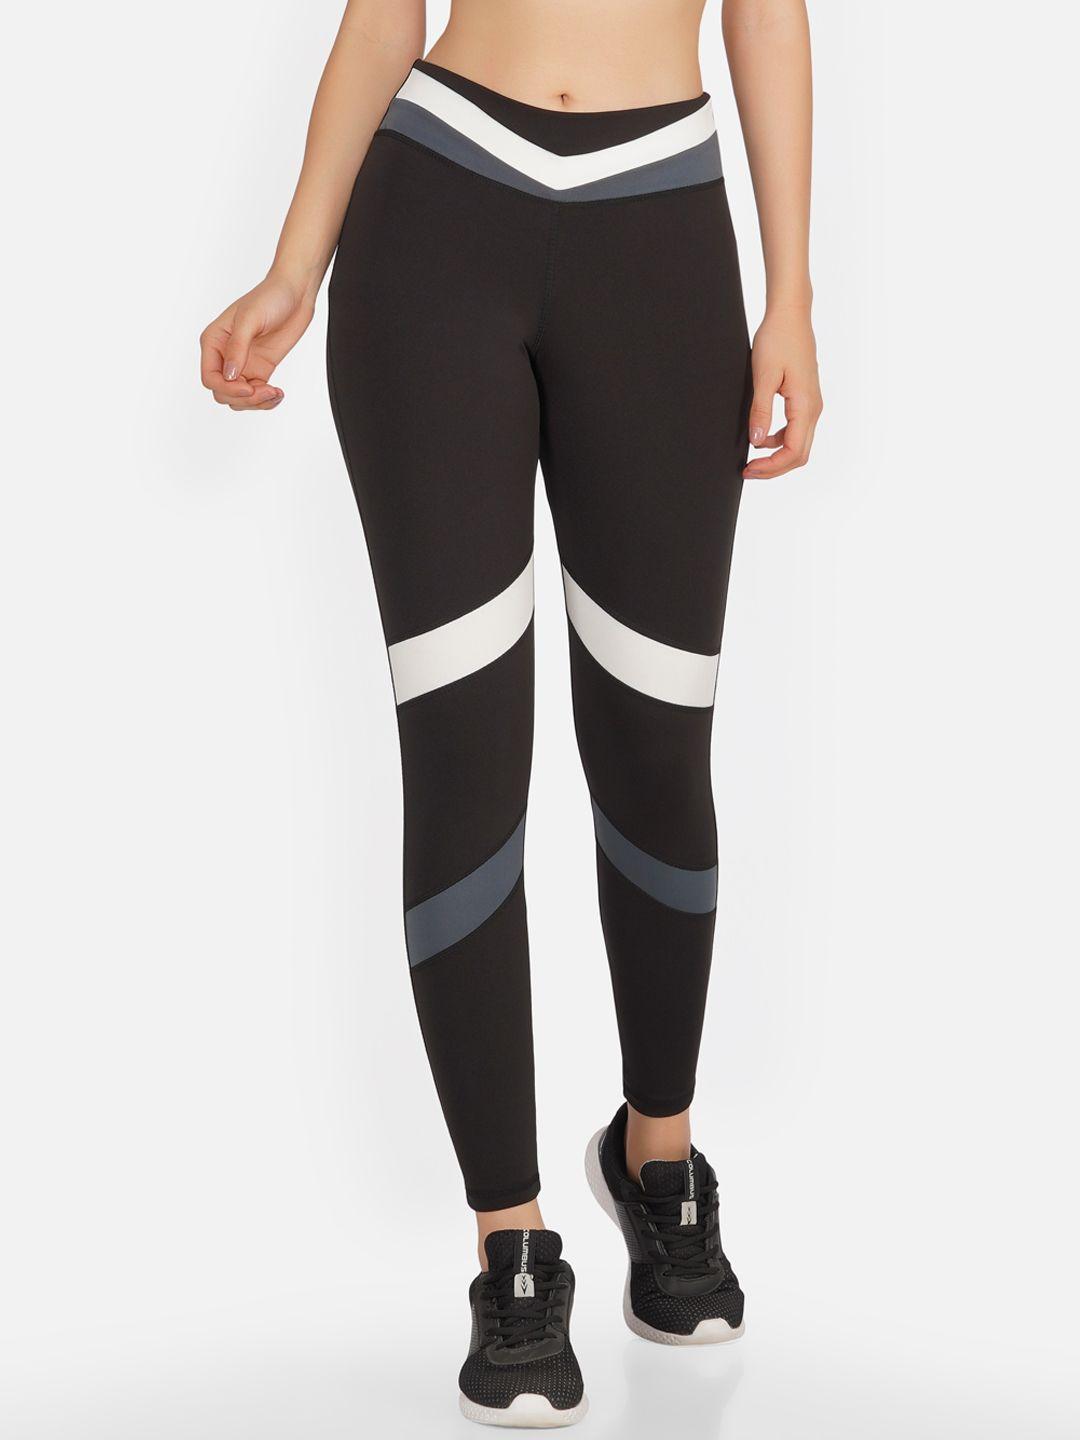 neu look fashion women black & grey colourblocked gym tights